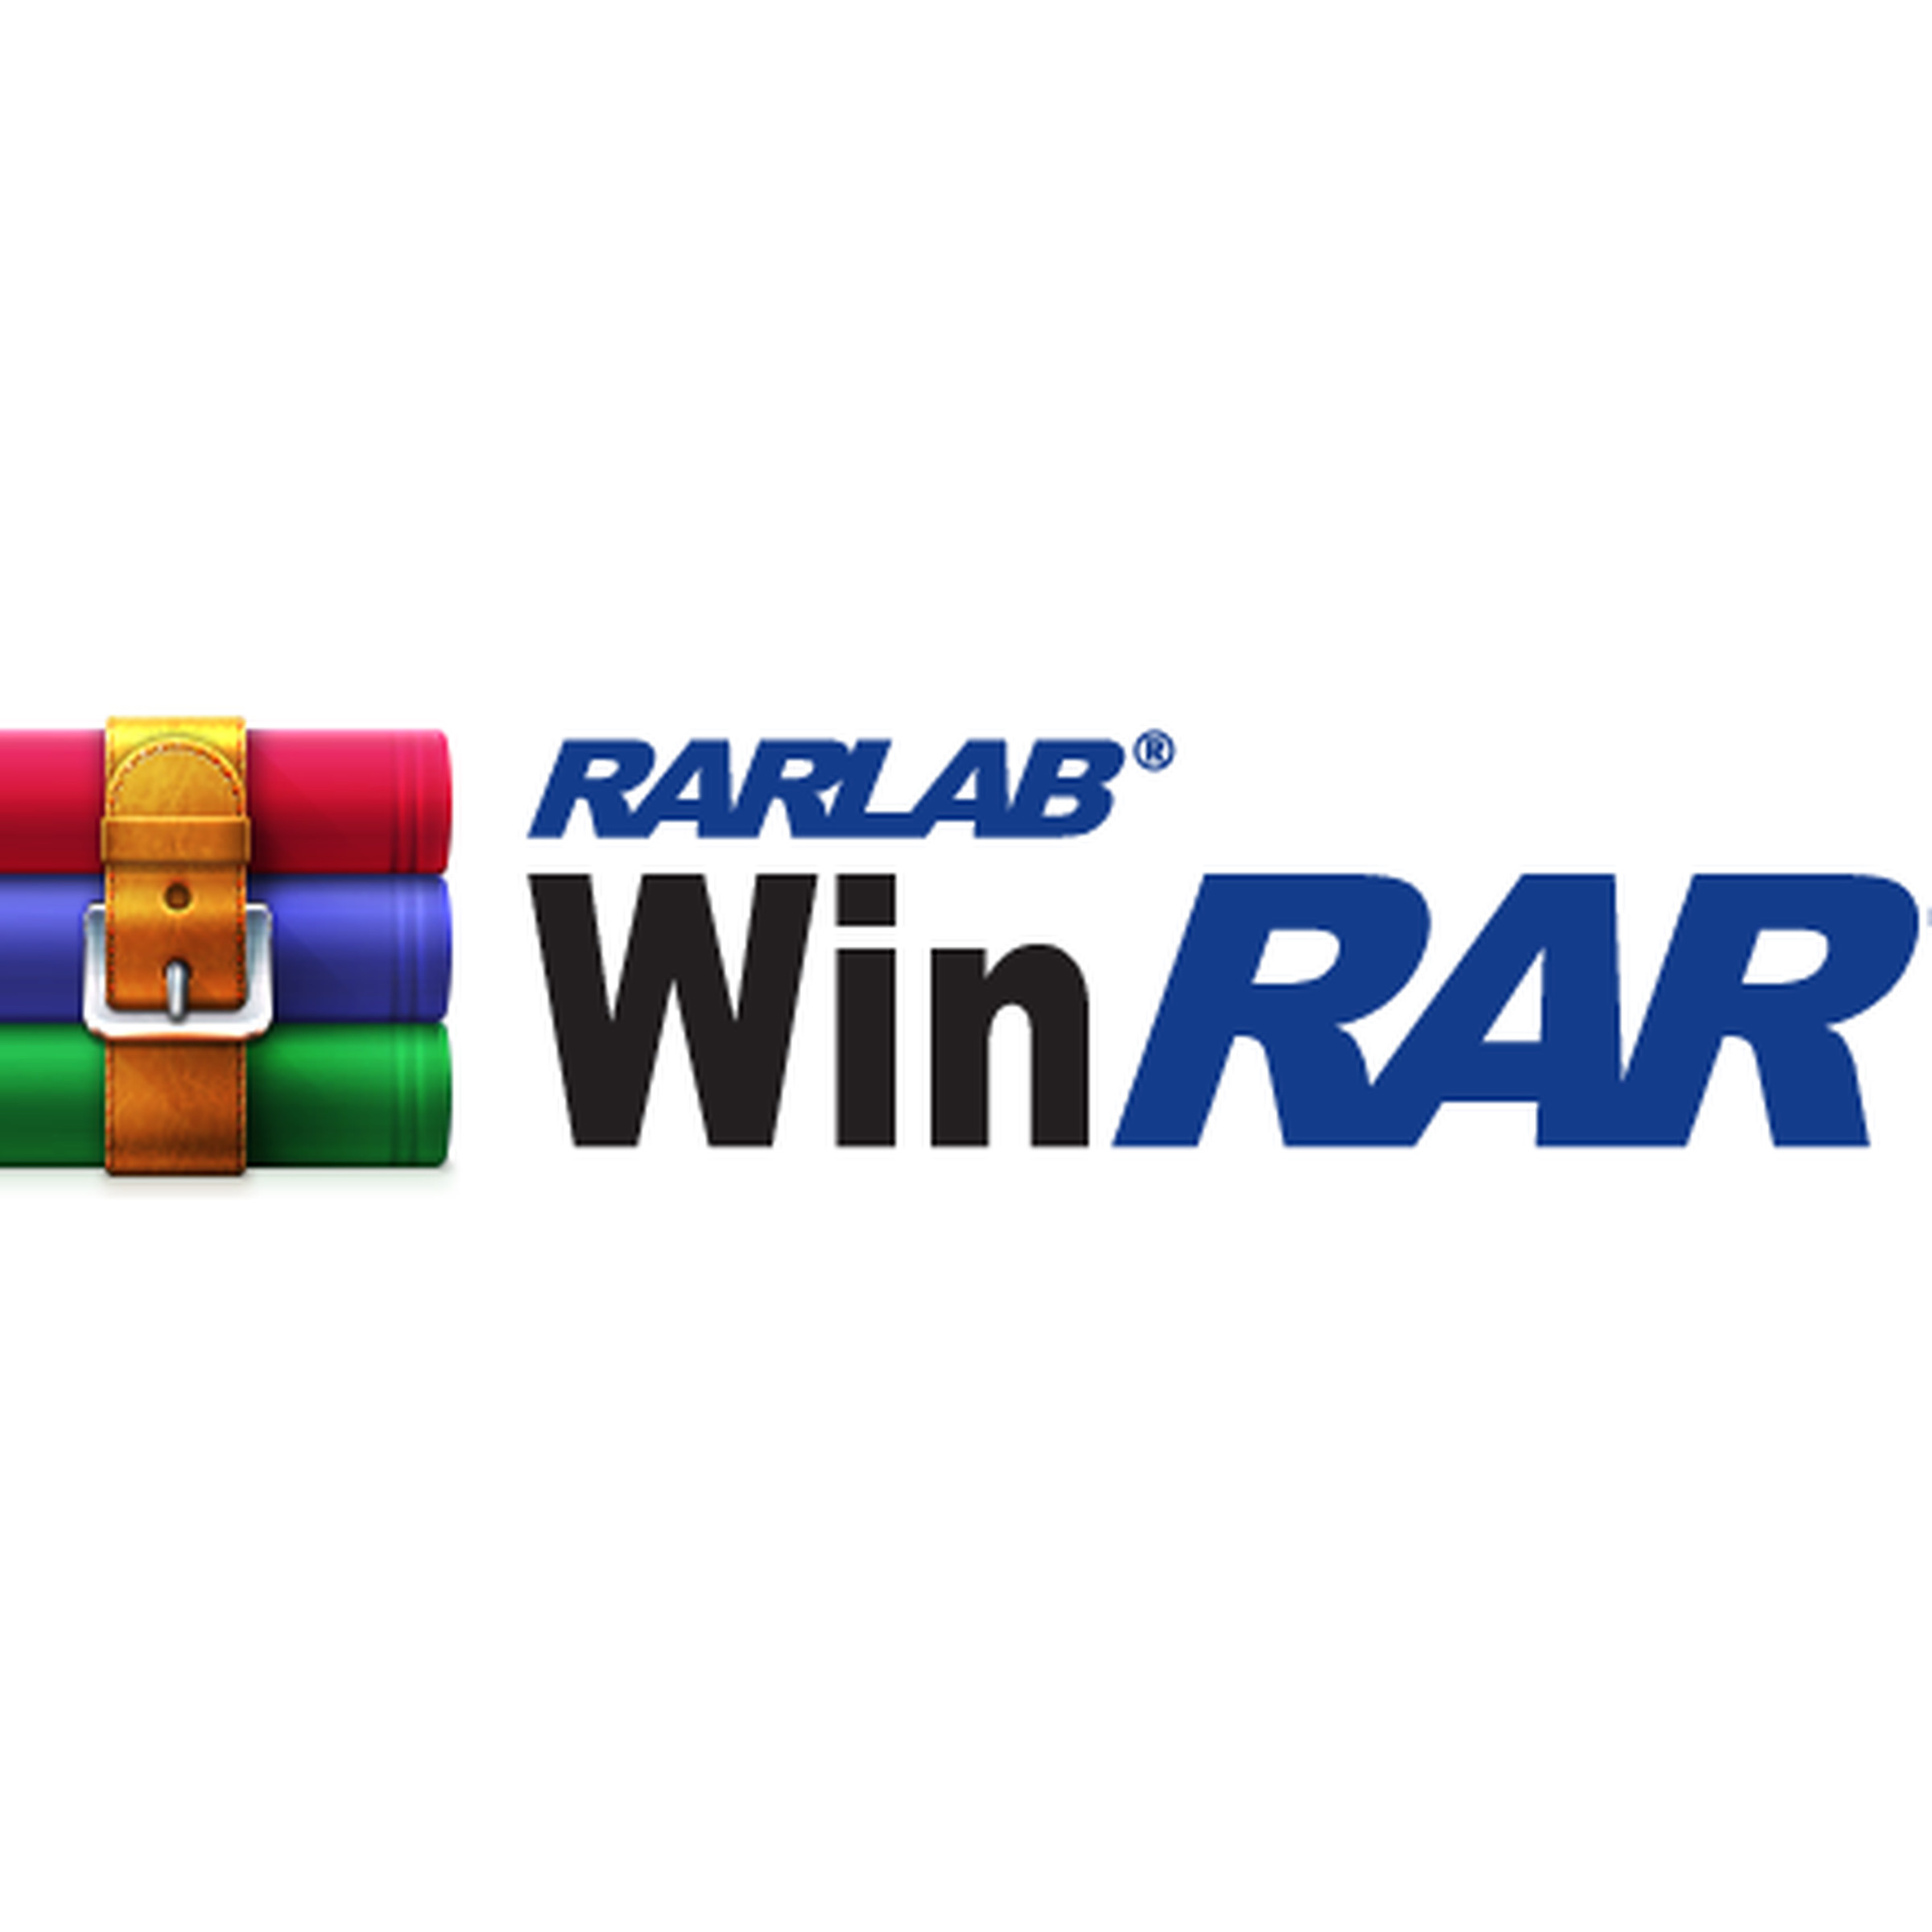 WinRAR logo